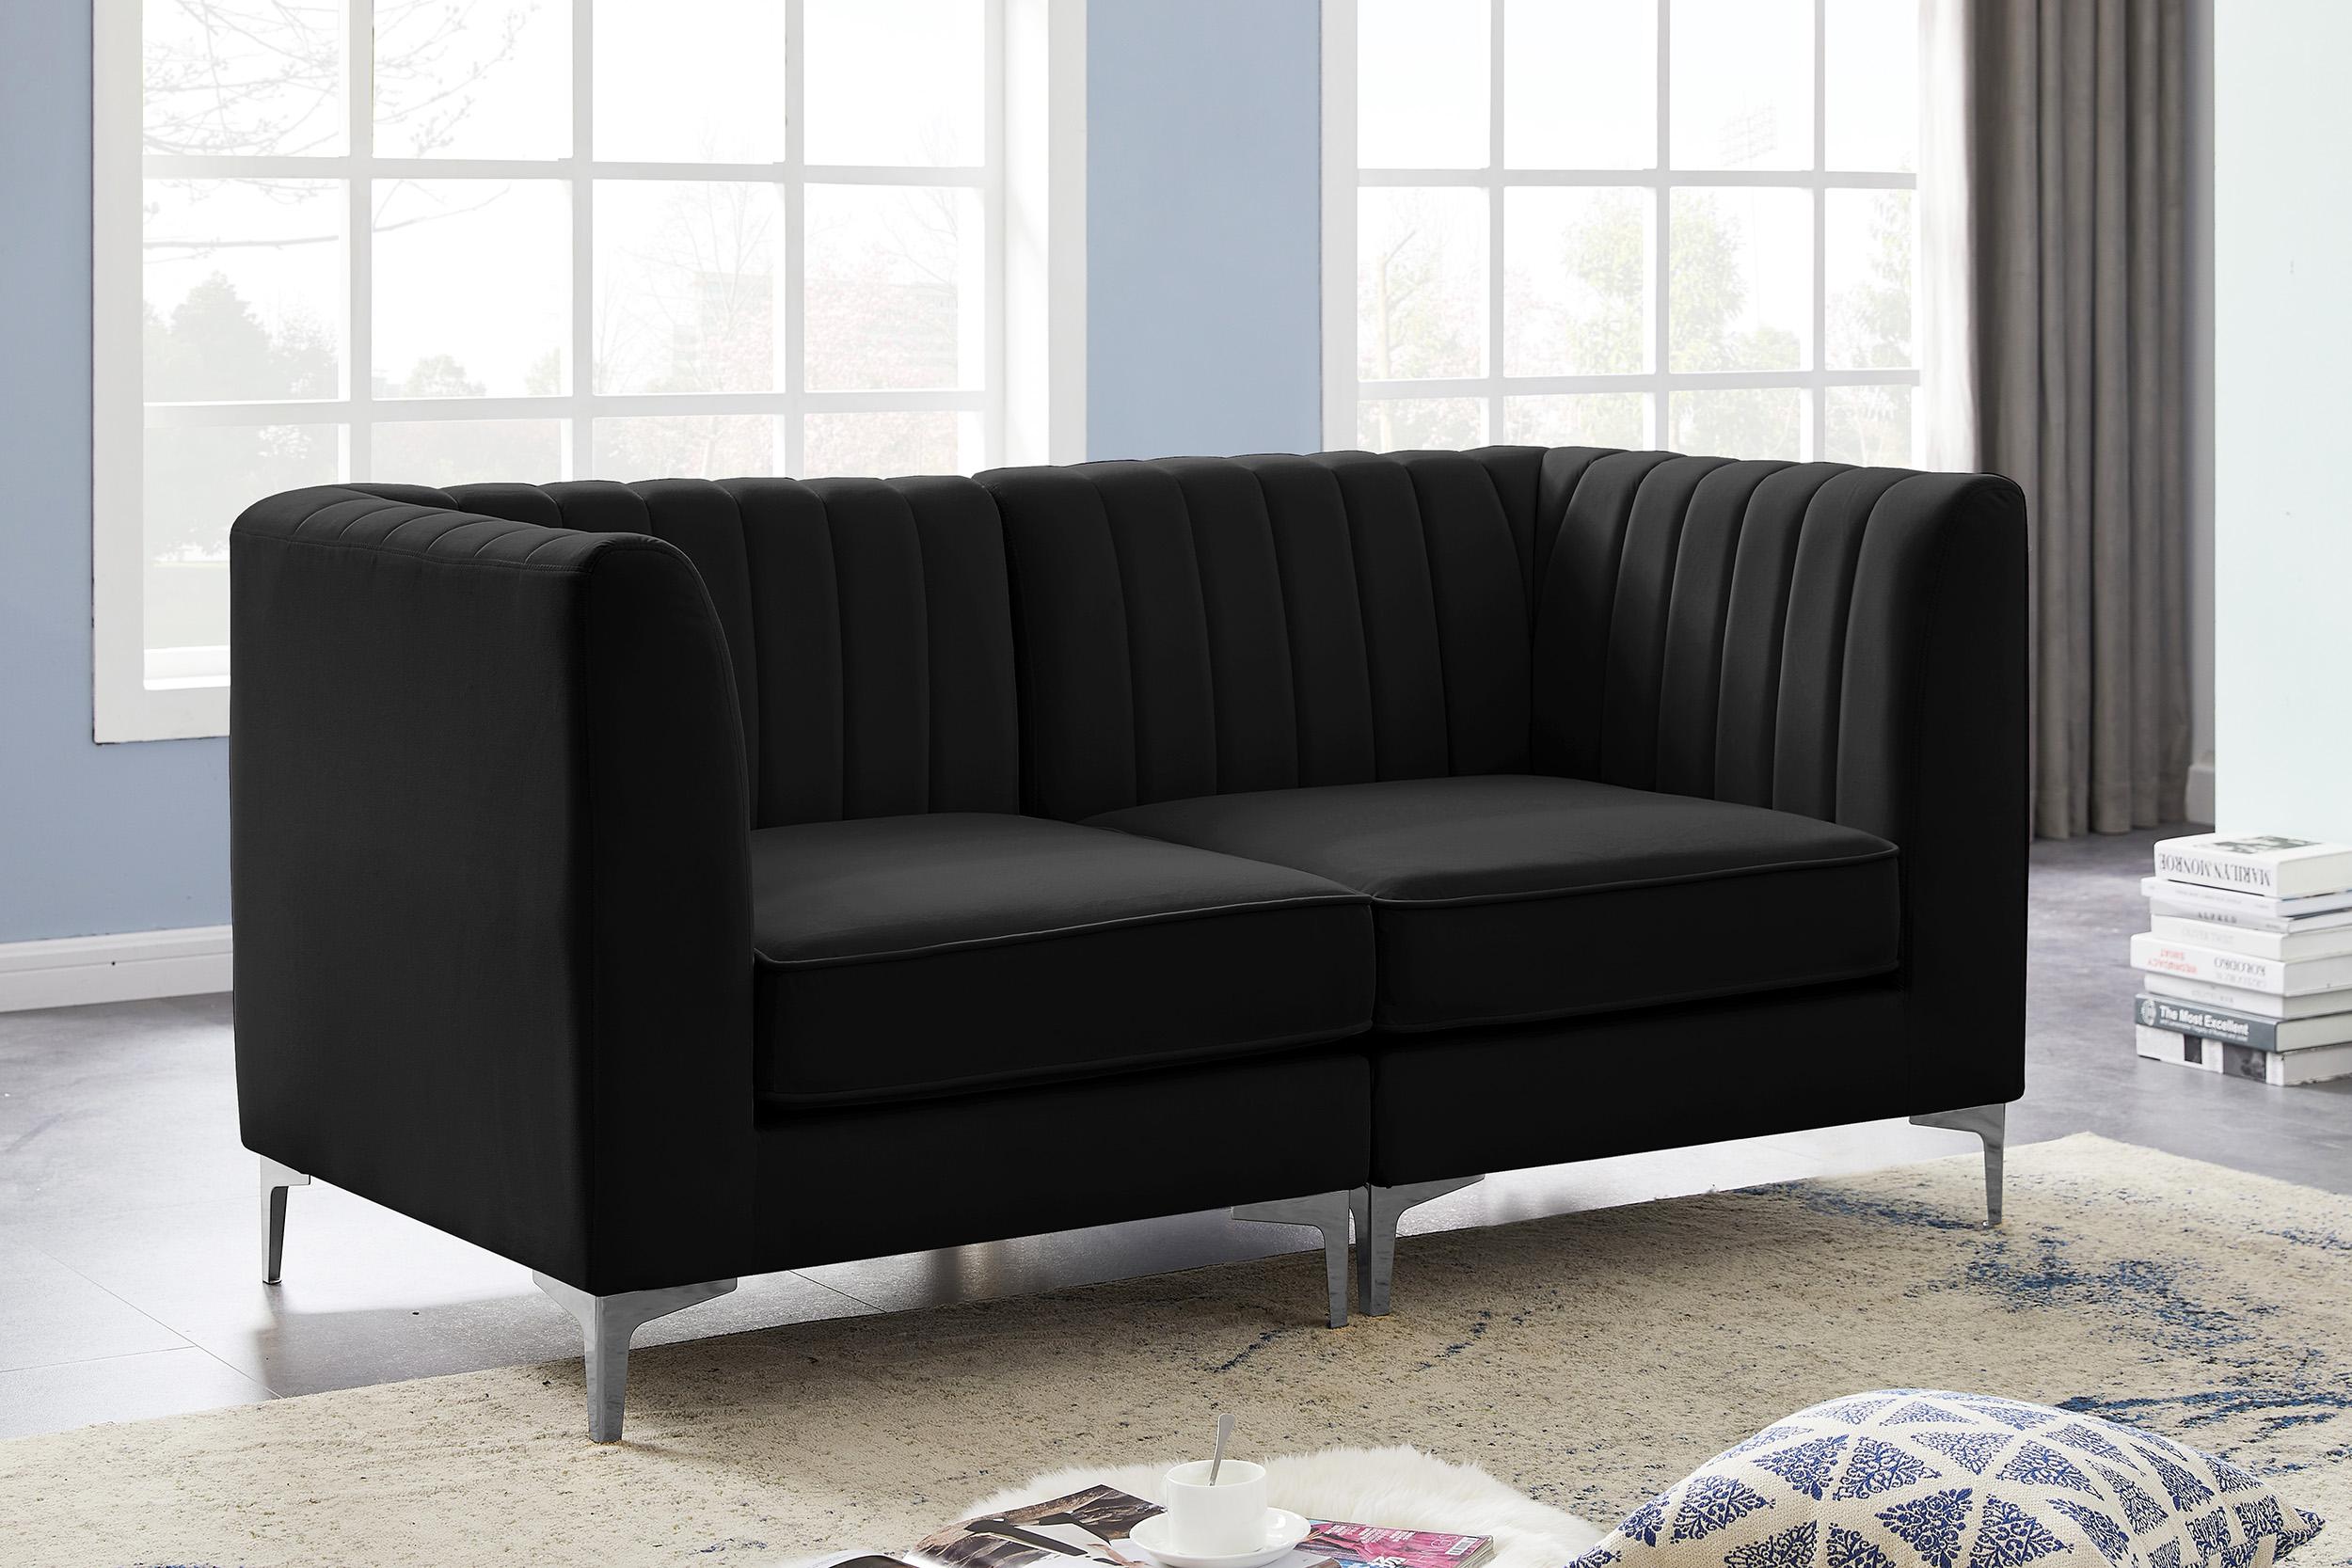 

    
604Black-S67 Meridian Furniture Modular Sectional Sofa
